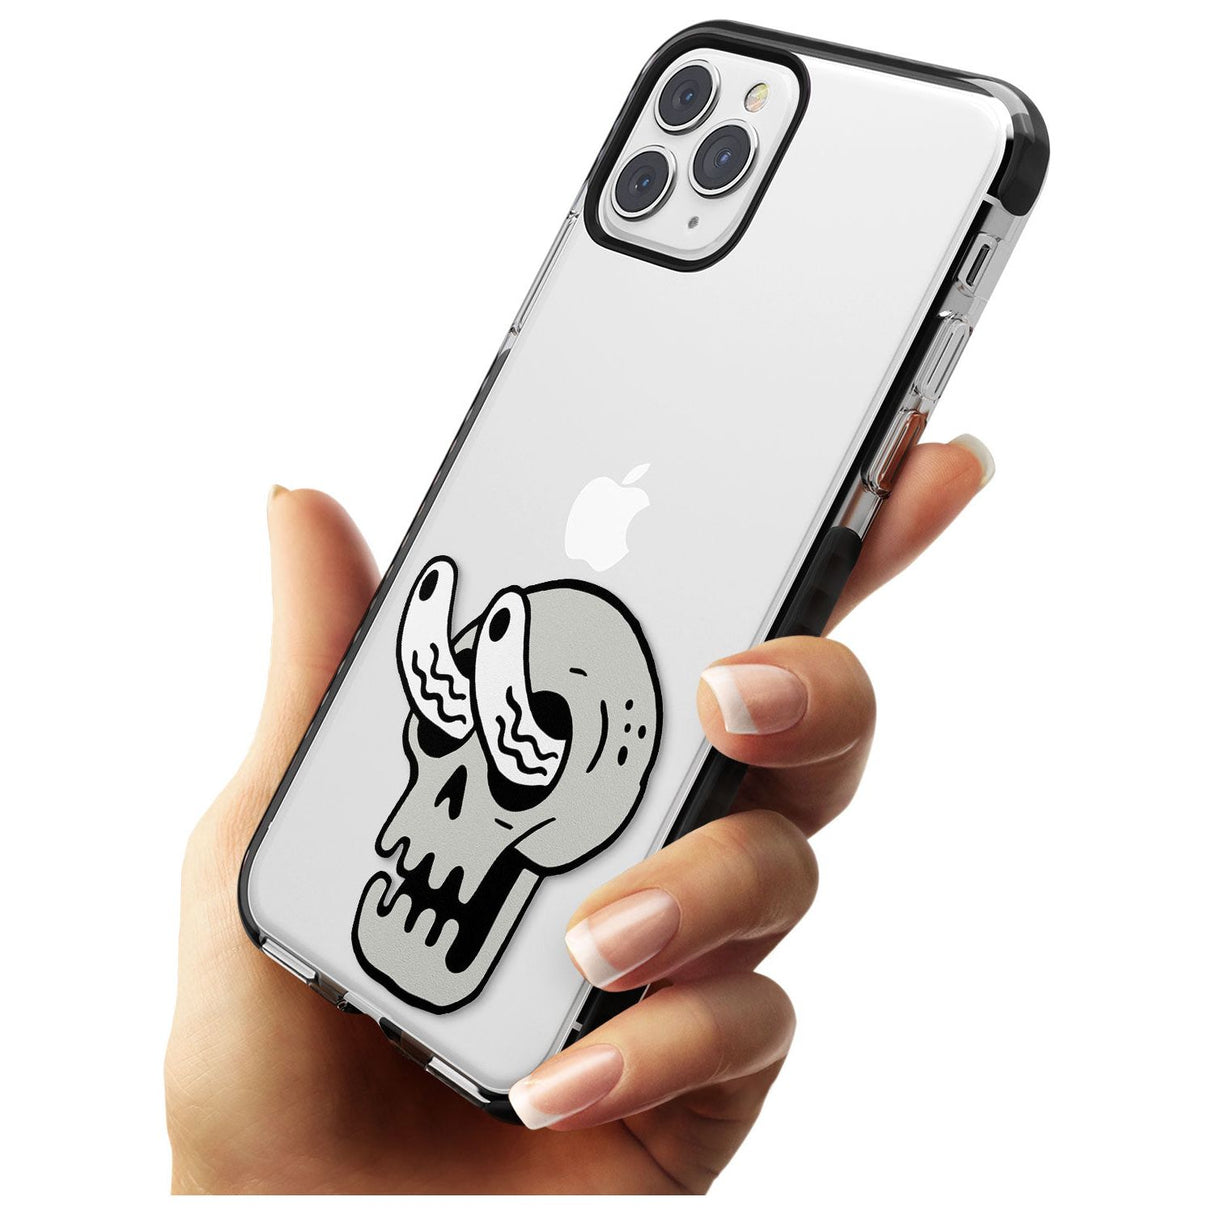 Skull Eyes Black Impact Phone Case for iPhone 11